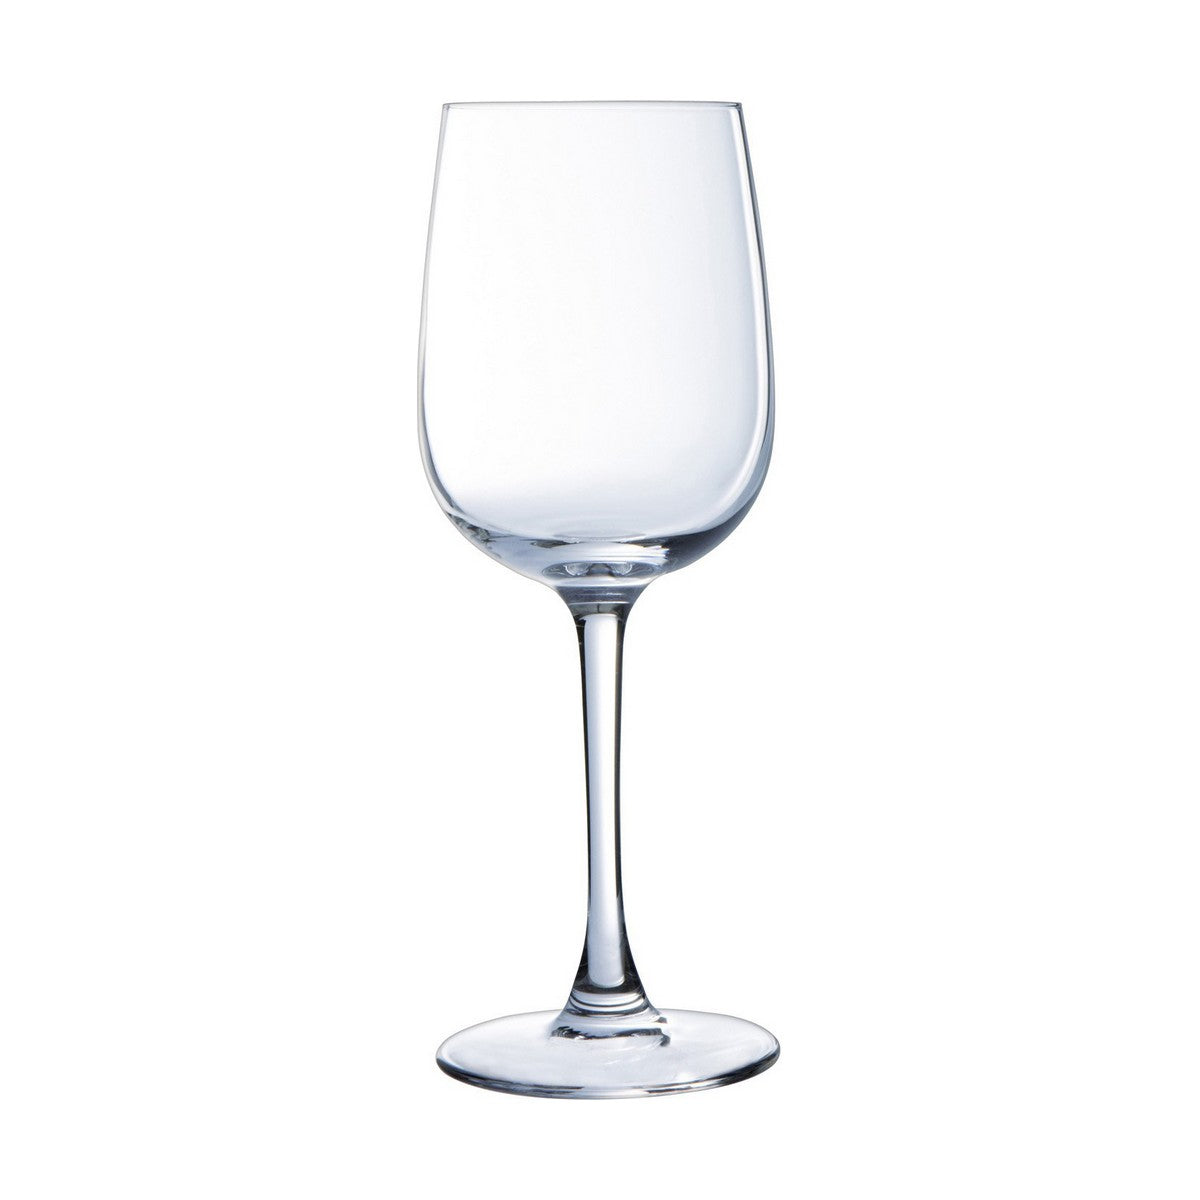 Wijnglas Luminarc Versailles 6 unidades 270 ml (27 cl)